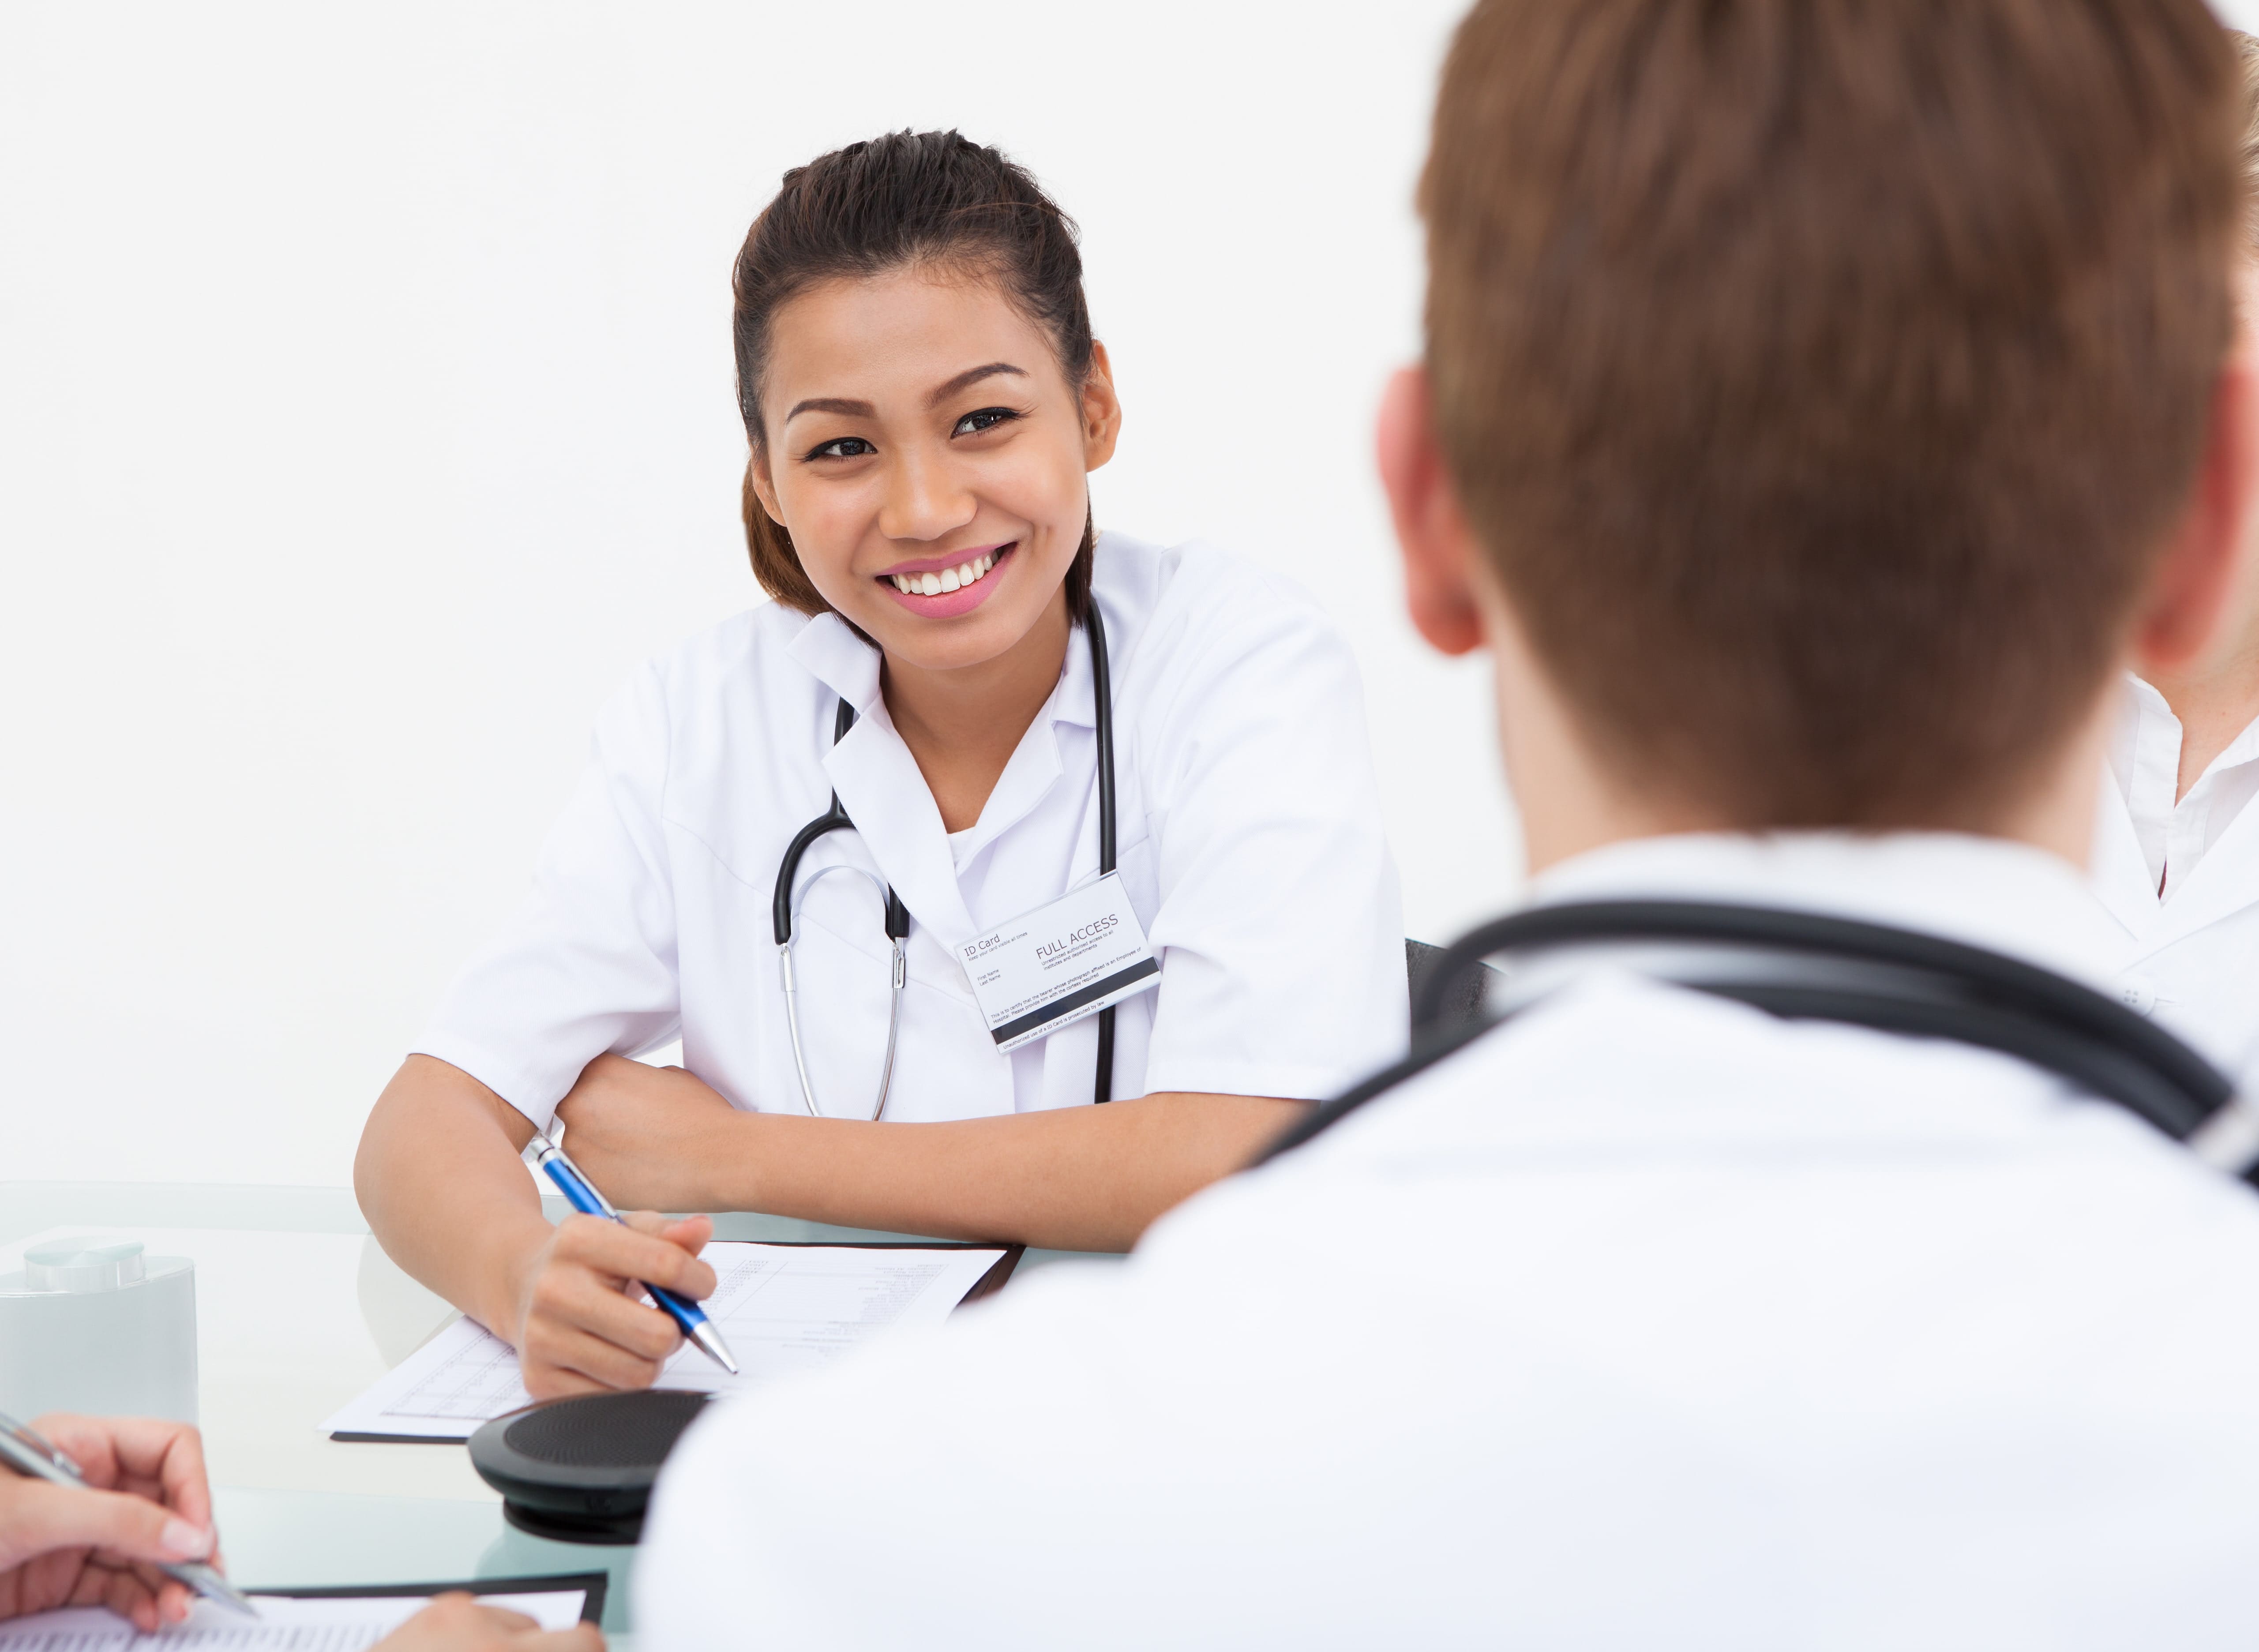 Healthcare job interview tips